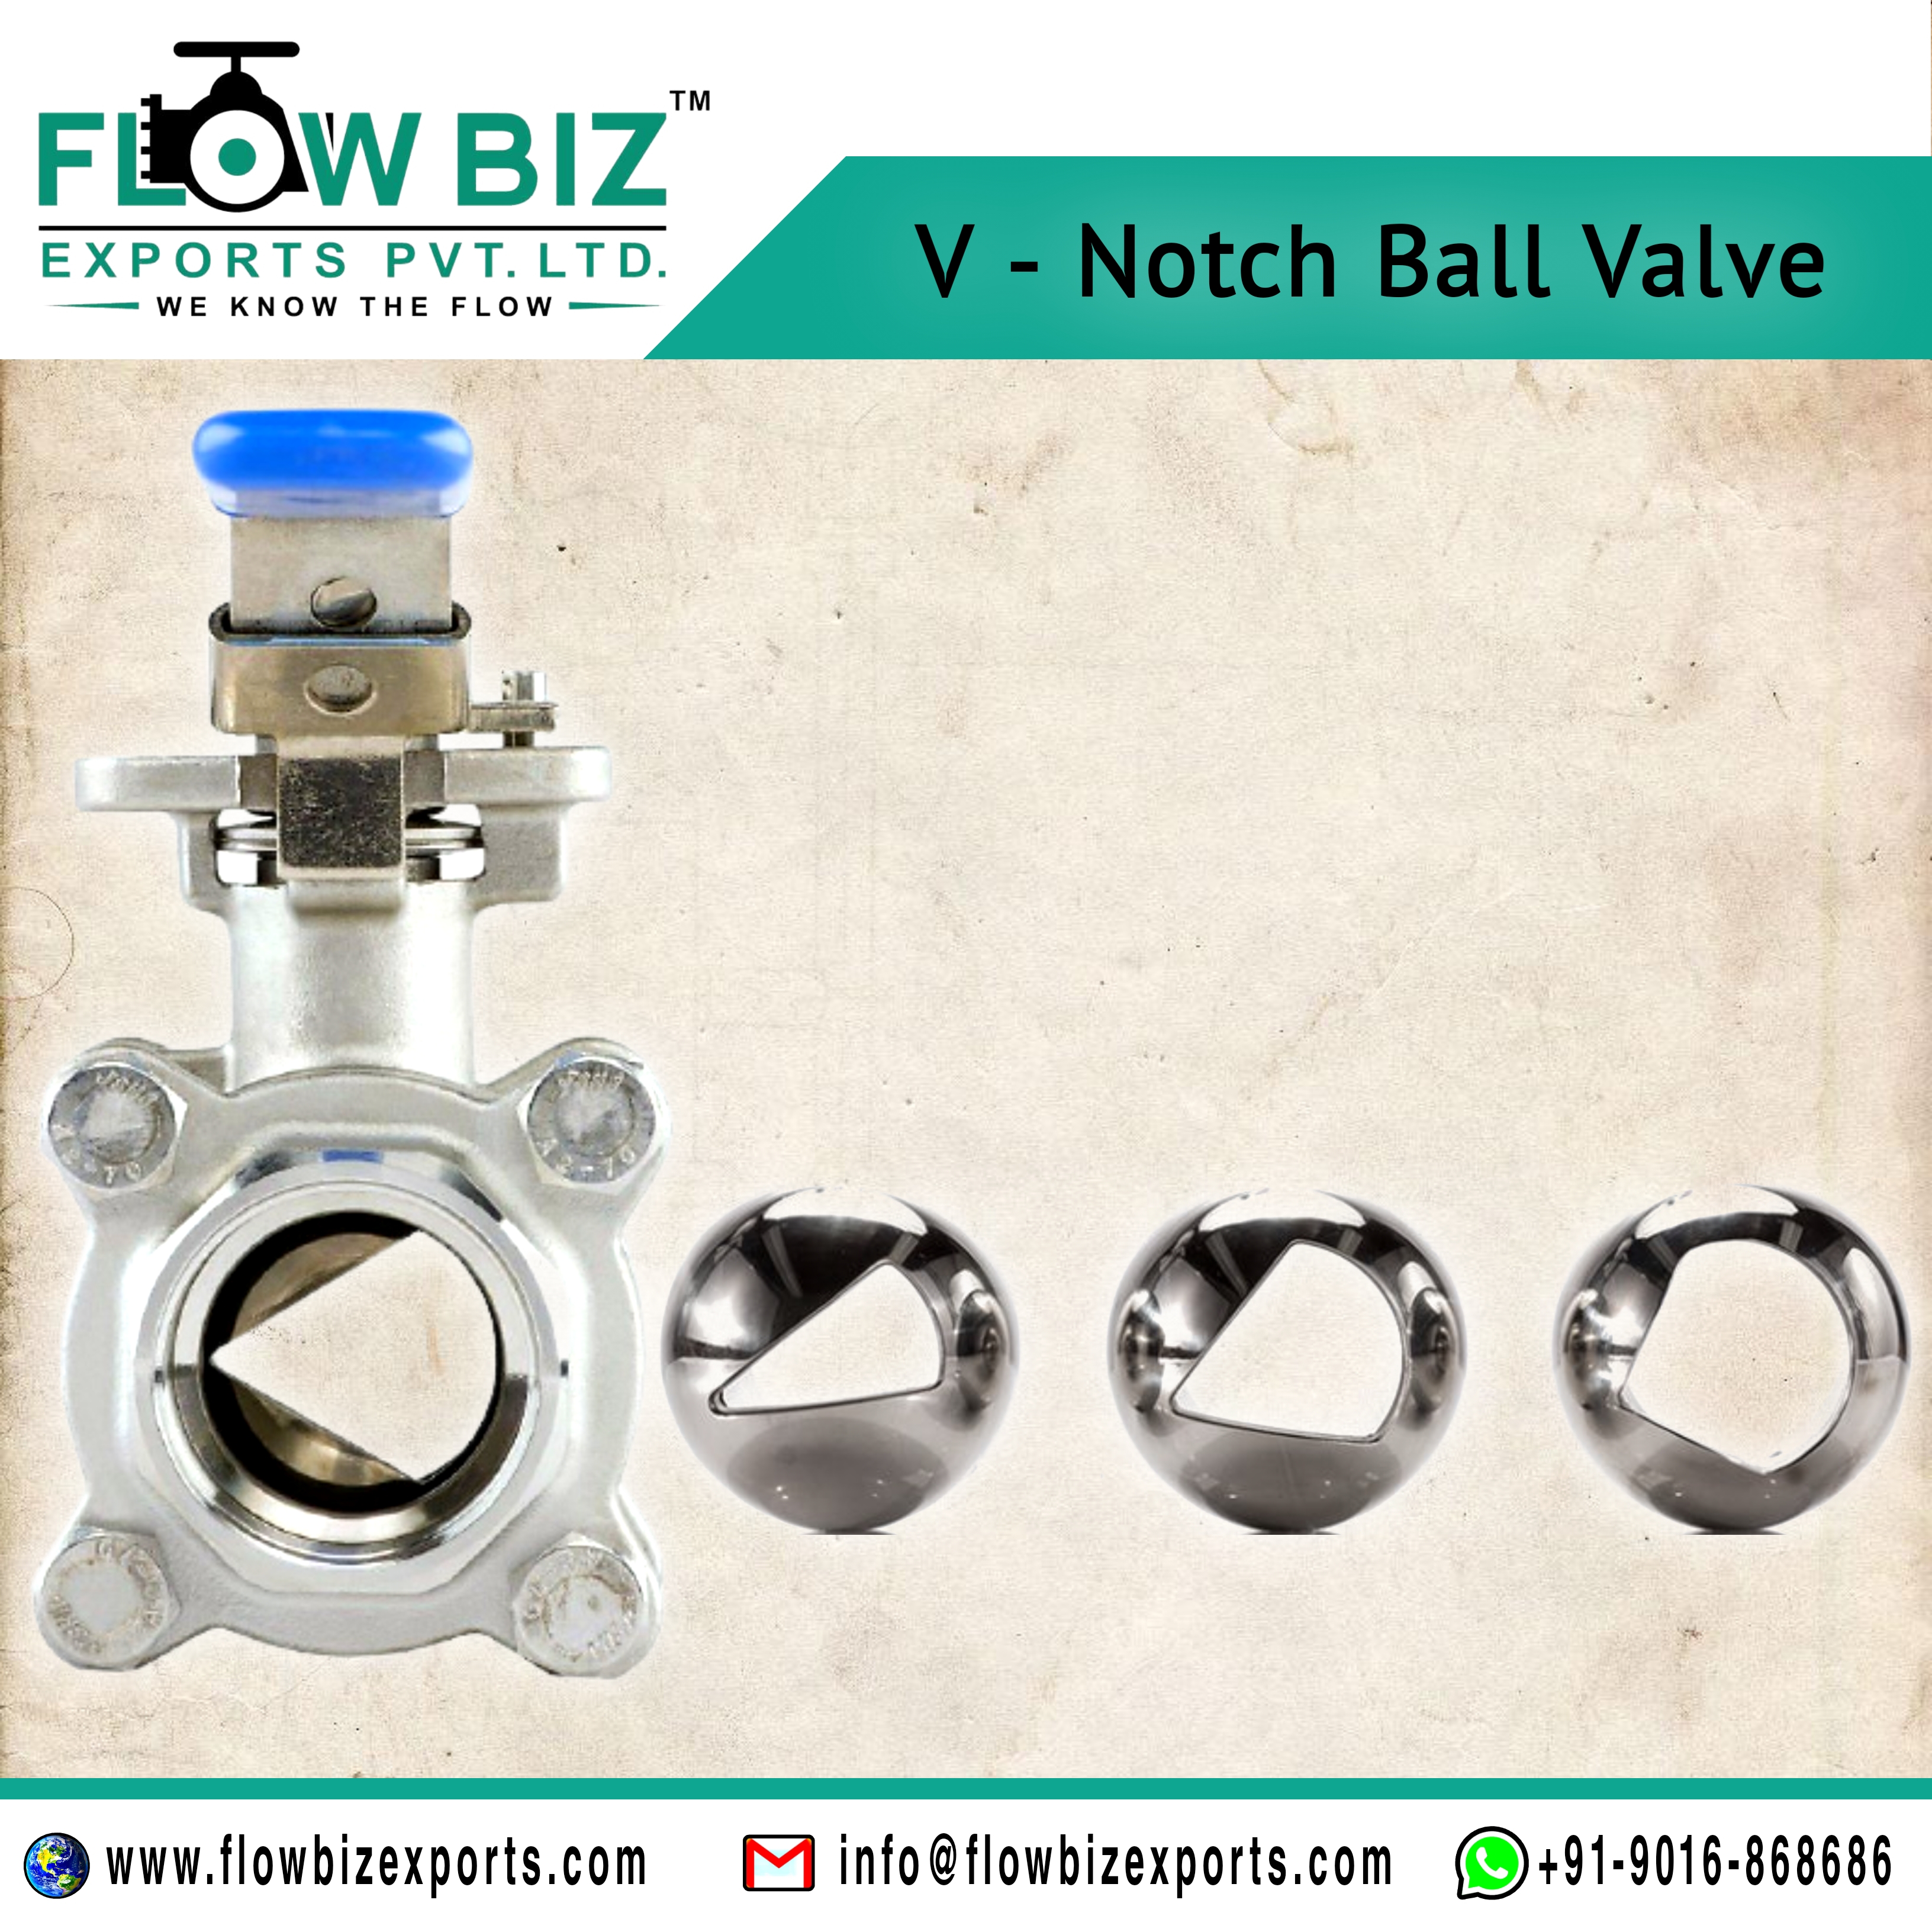 v notch ball valve manufacturer india - Flowbiz